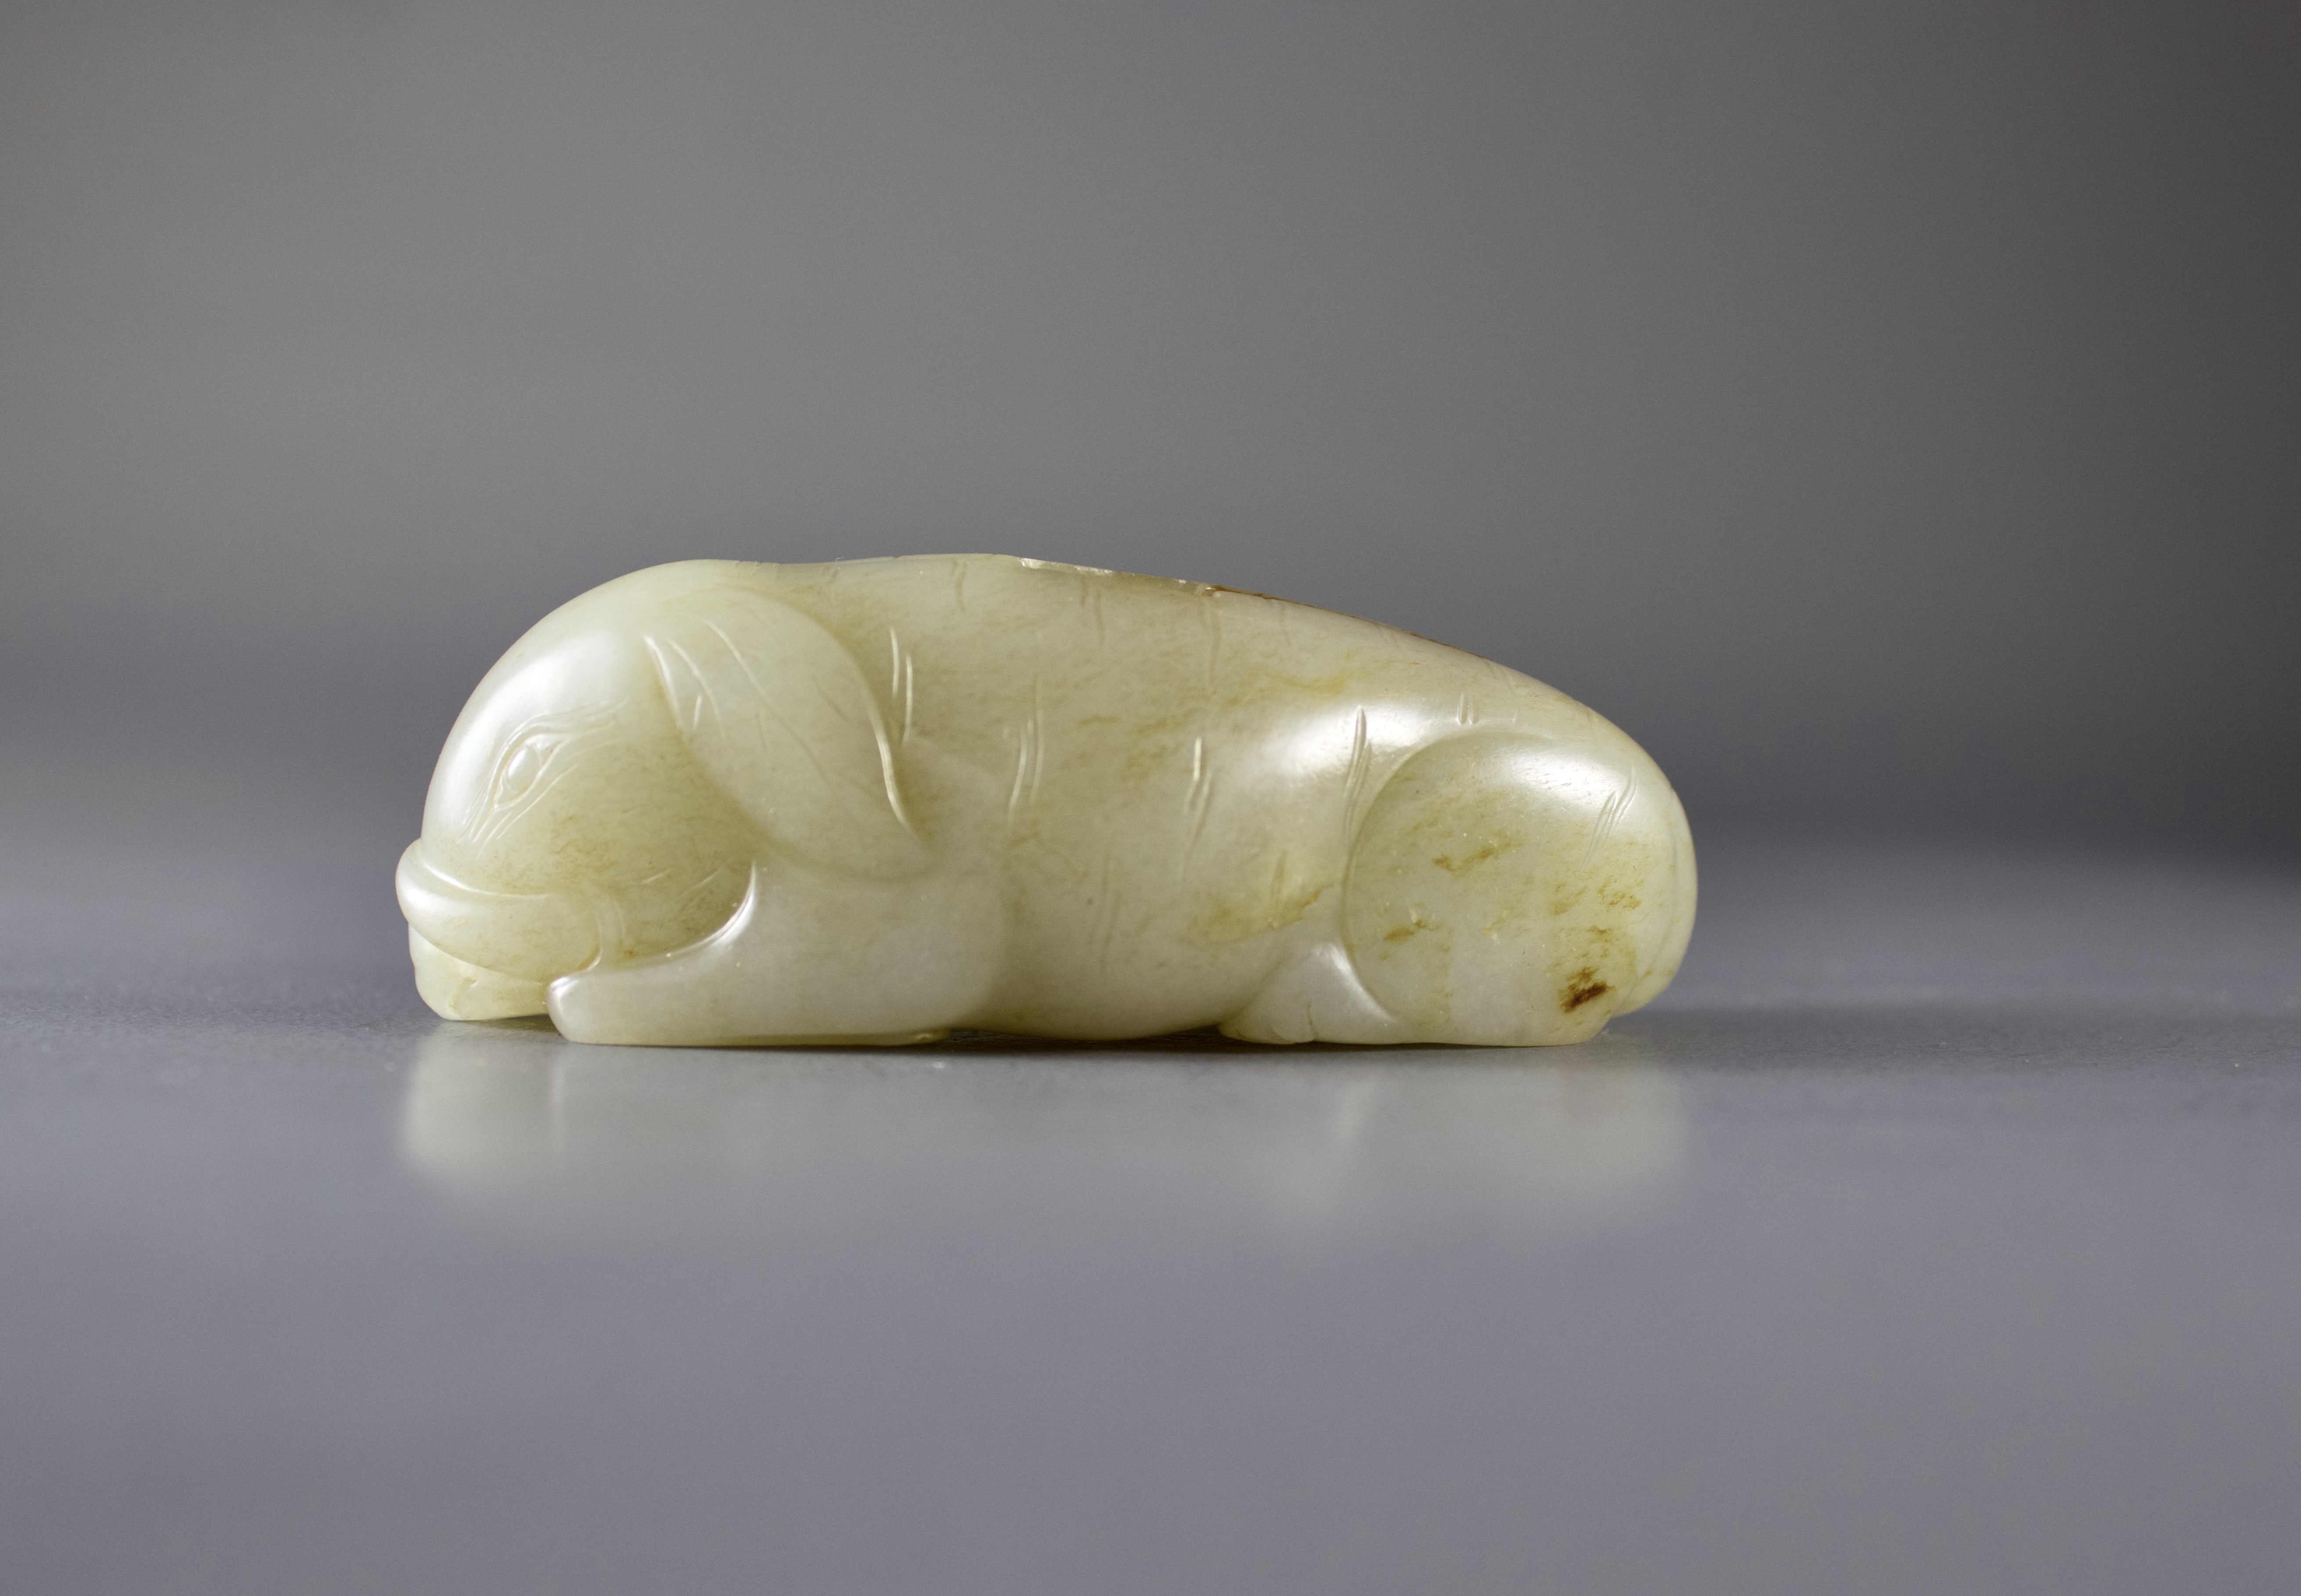 A Jade Figure of an Elephant, c. 1800L: 8cm A Jade Figure of an Elephant, c. 1800 carved from a pale